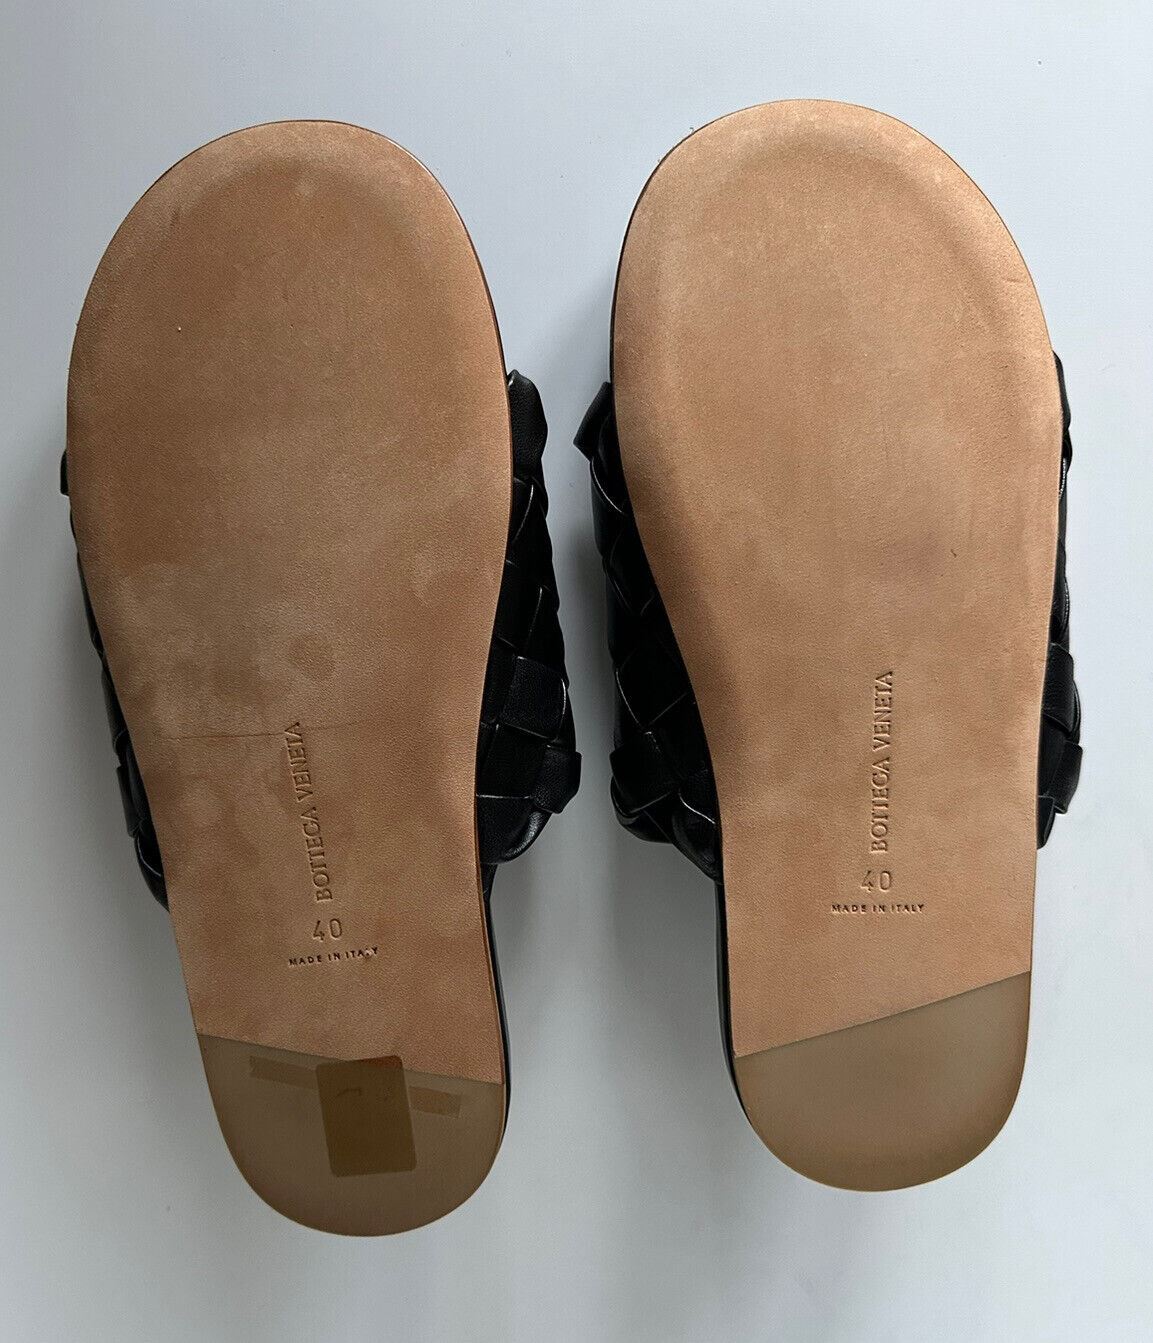 NIB $1150 Bottega Veneta Men's Intrecciato Leather Sandals Black 9 US 620298 IT